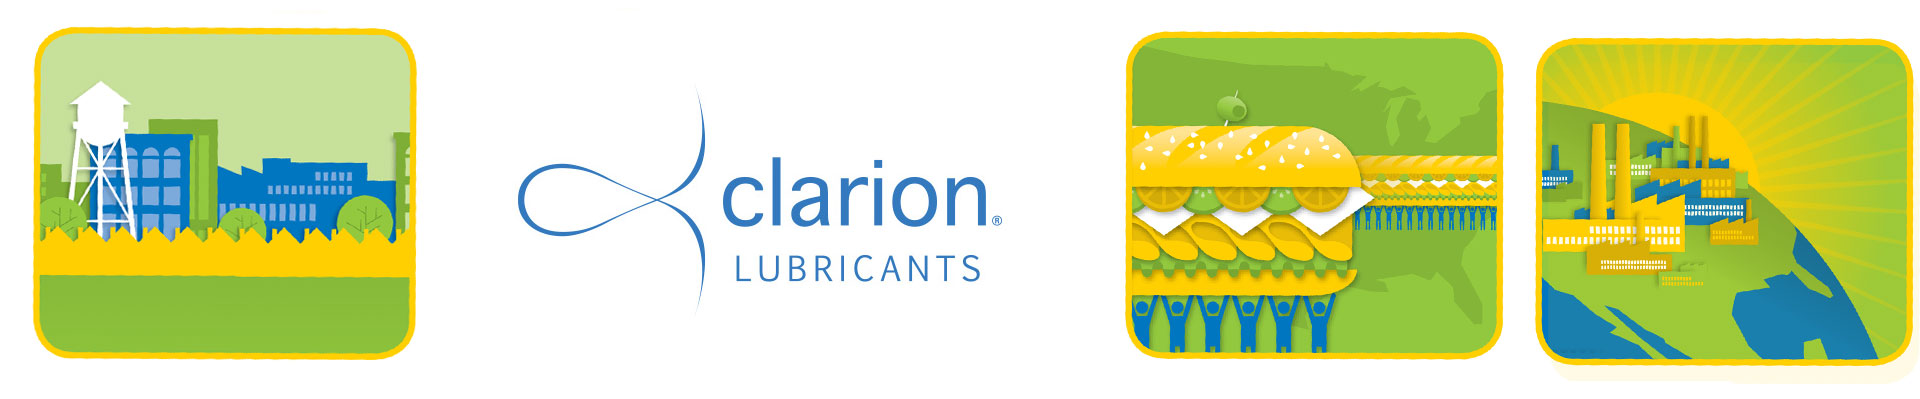 clarion-food-grade-lubricants-sutton